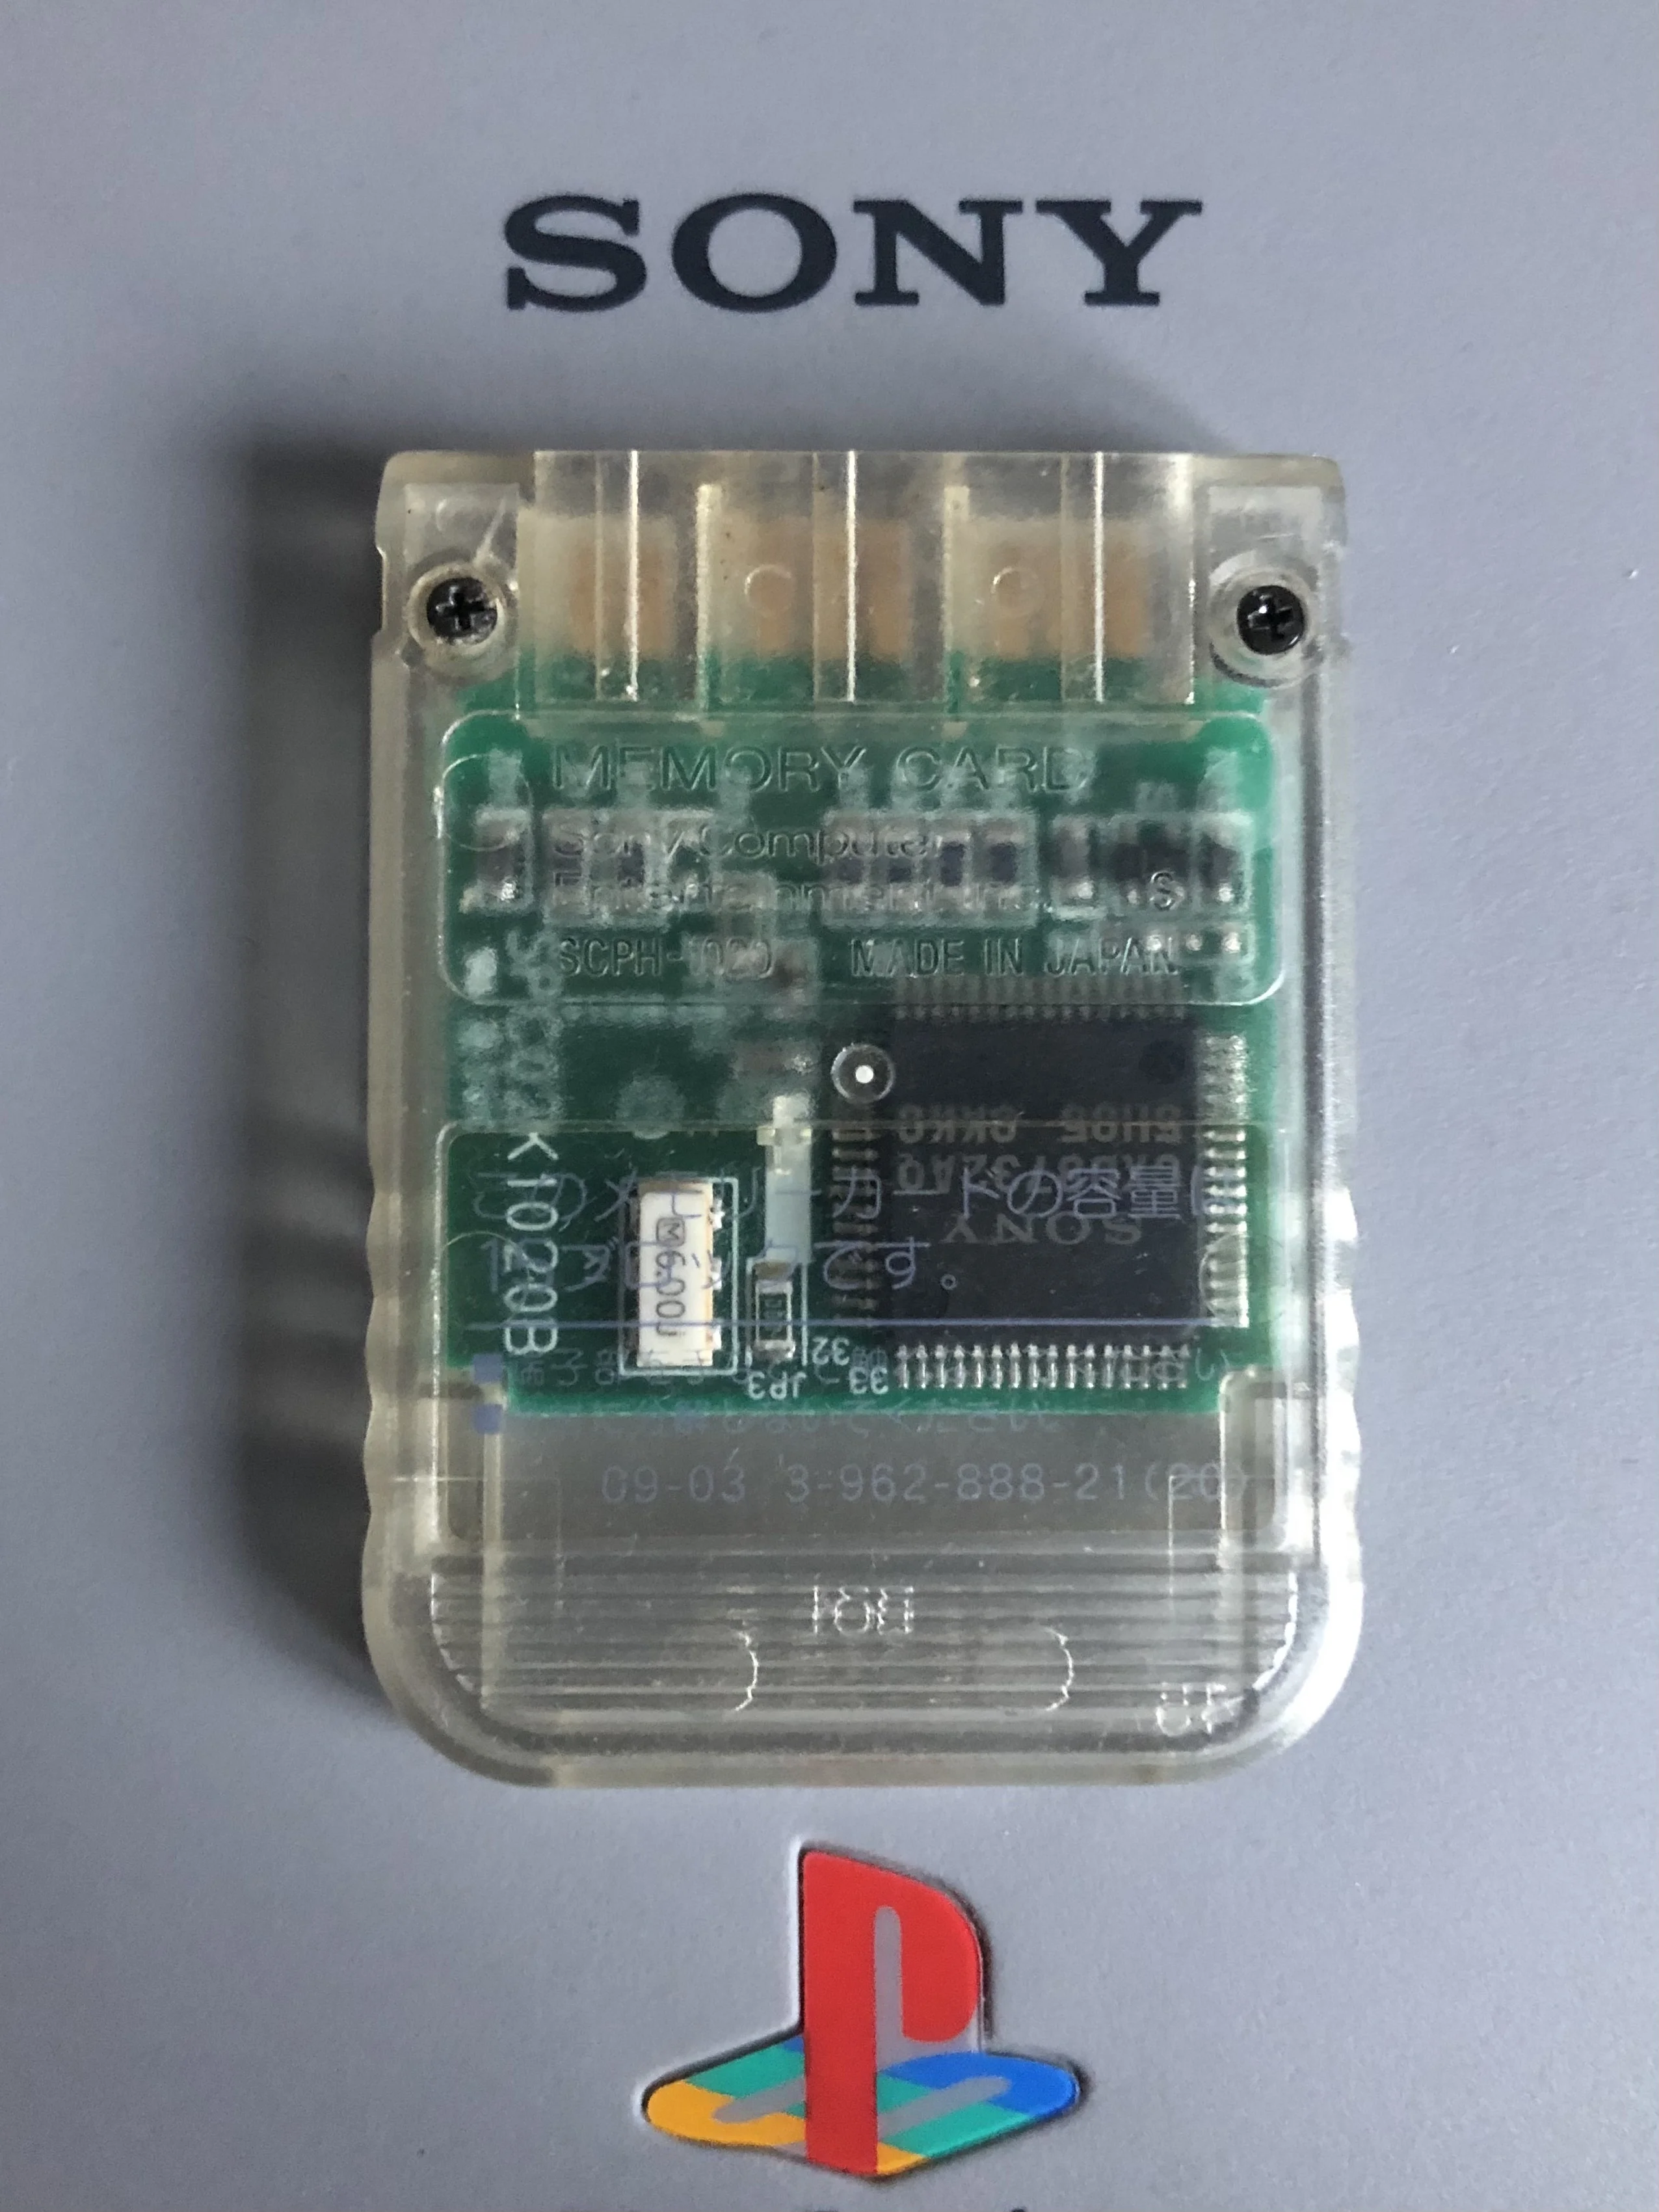  Sony PlayStation Clear Memory Card [JP]